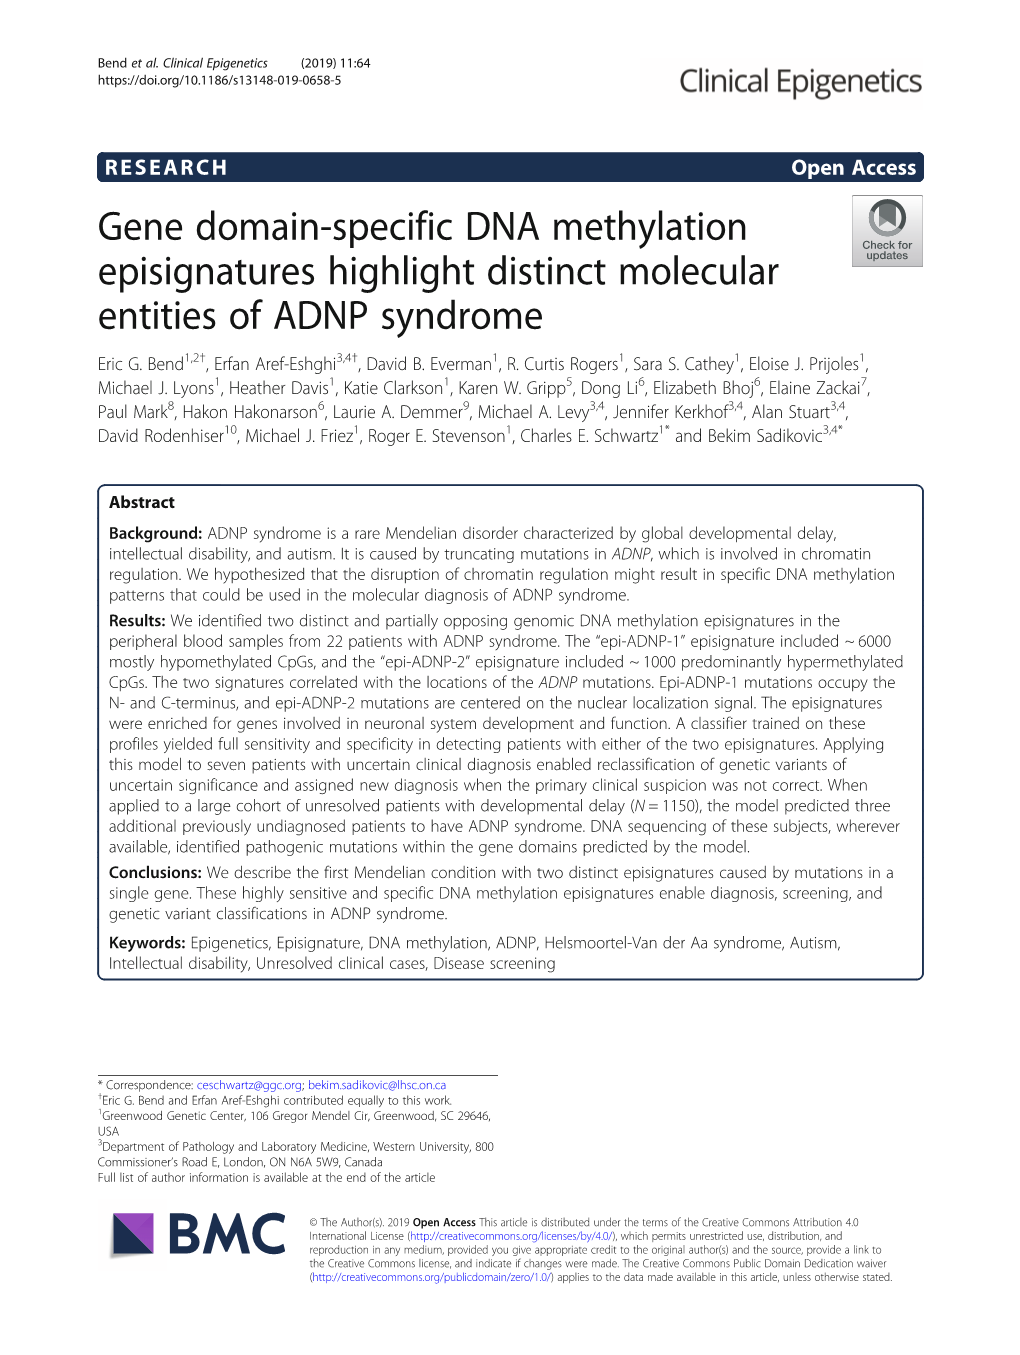 Gene Domain-Specific DNA Methylation Episignatures Highlight Distinct Molecular Entities of ADNP Syndrome Eric G